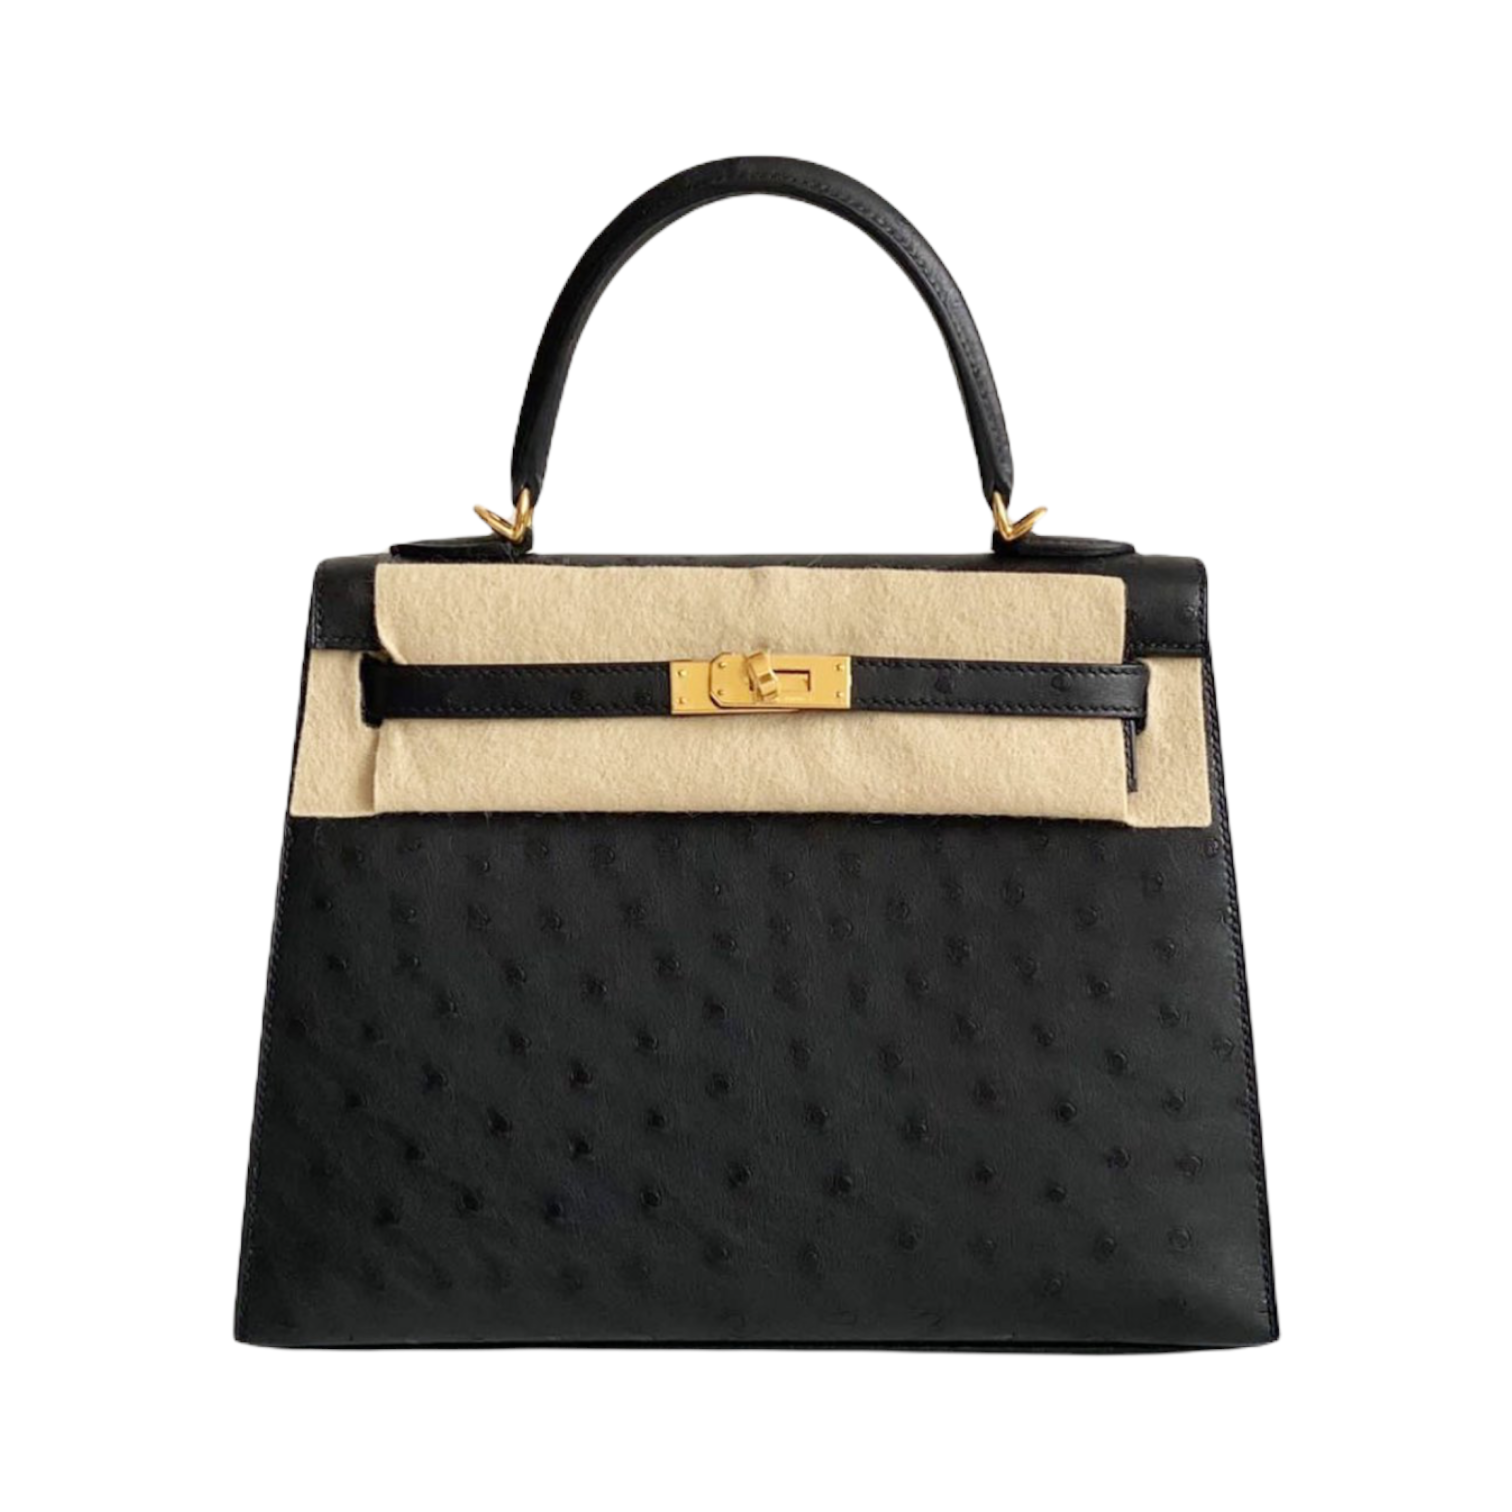 Exceptional Hermès Kelly Sellier Bag Black Crinoline and Silver 25 cm RARE